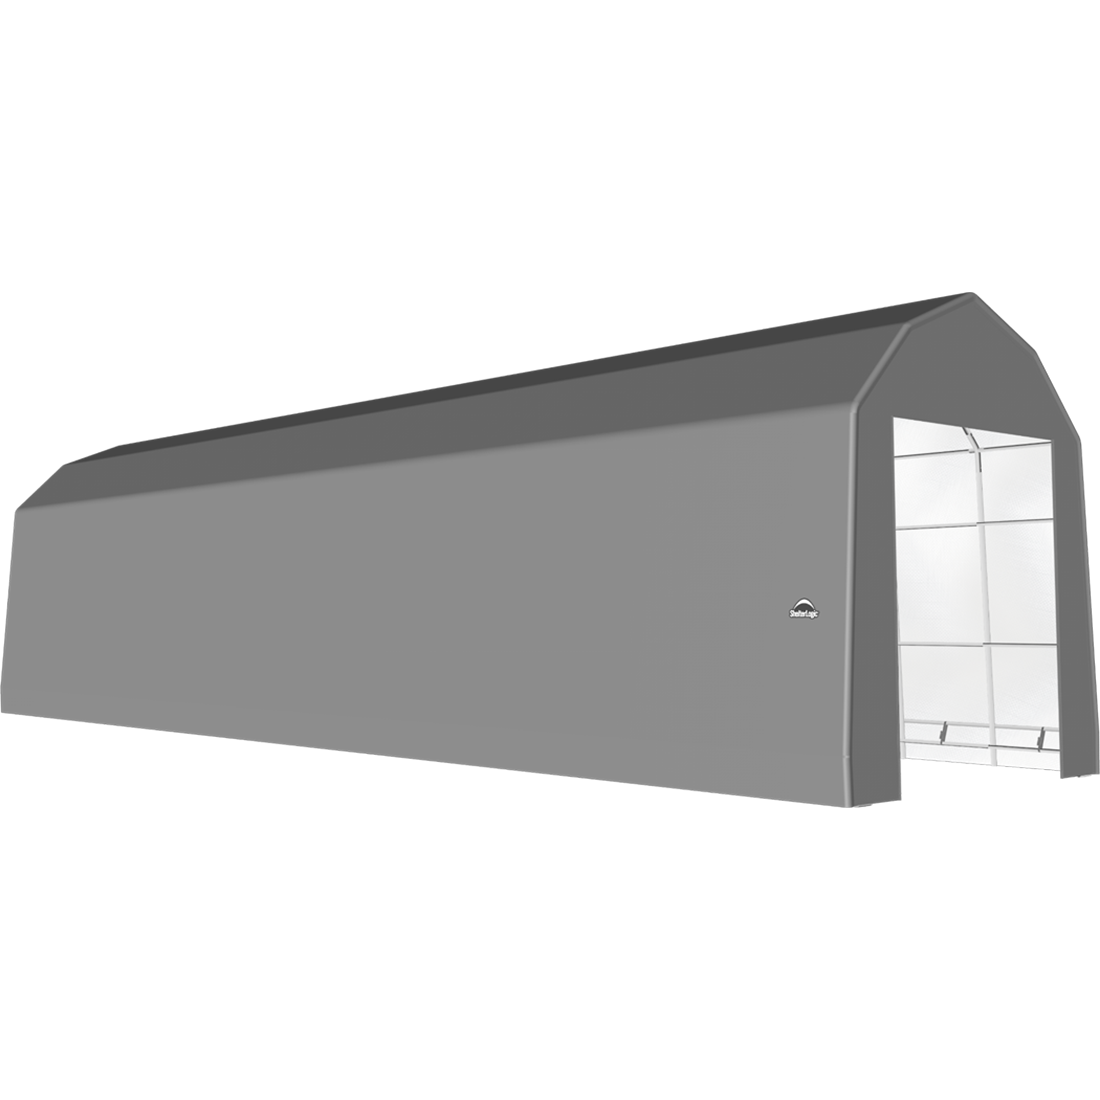 ShelterTech SP Series Barn Shelter, 15 ft. x 60 ft. x 17 ft. Heavy Duty PVC 14.5 oz. Gray